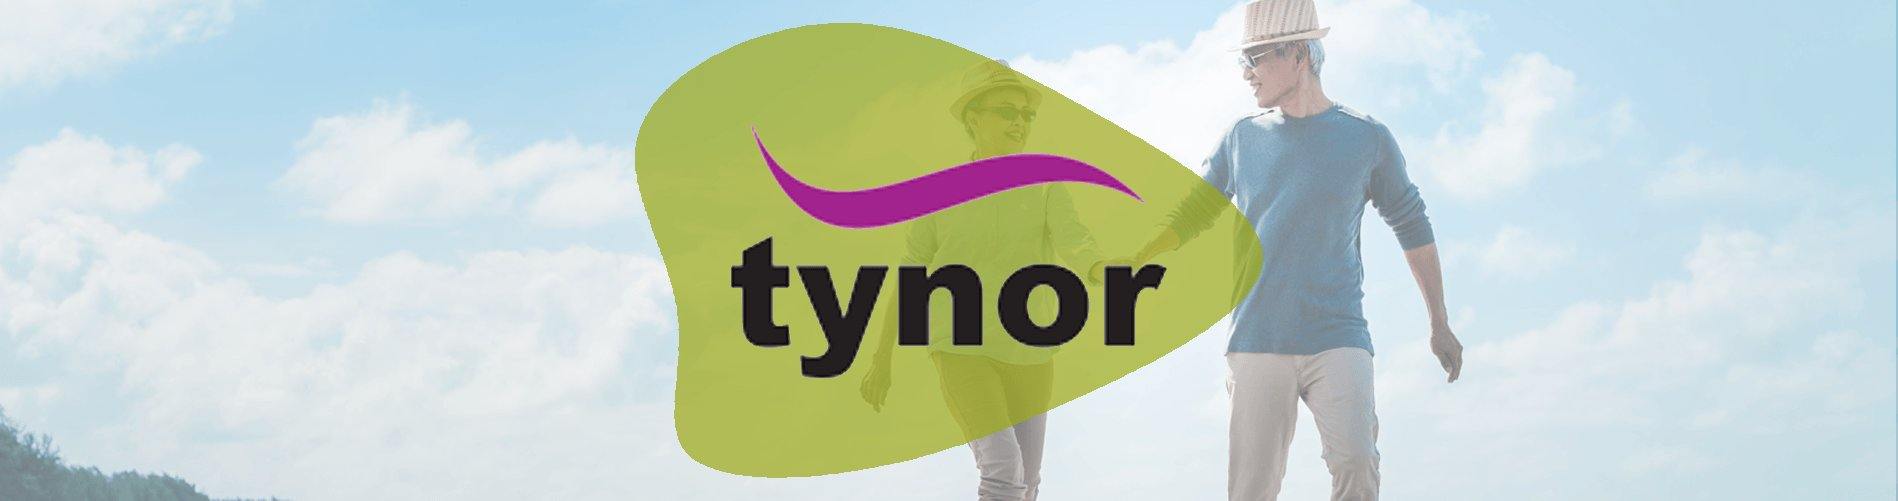 Buy original Tynor online  Tynor Knee Cap, Knee Support and Back